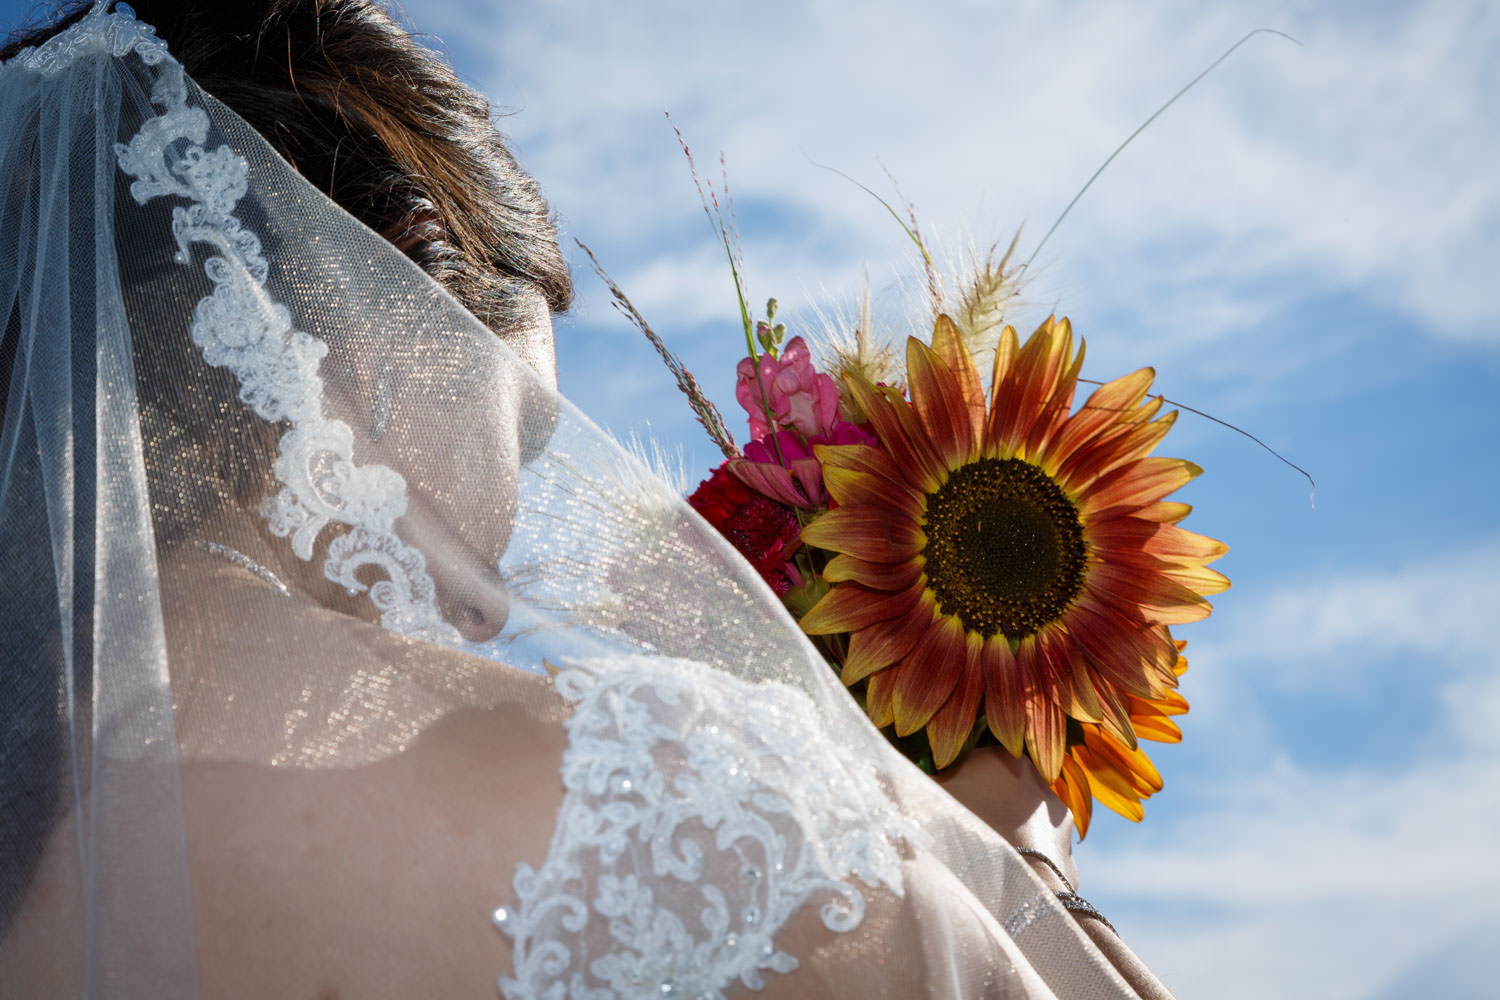 Brides Sunflower against a bright blue sky